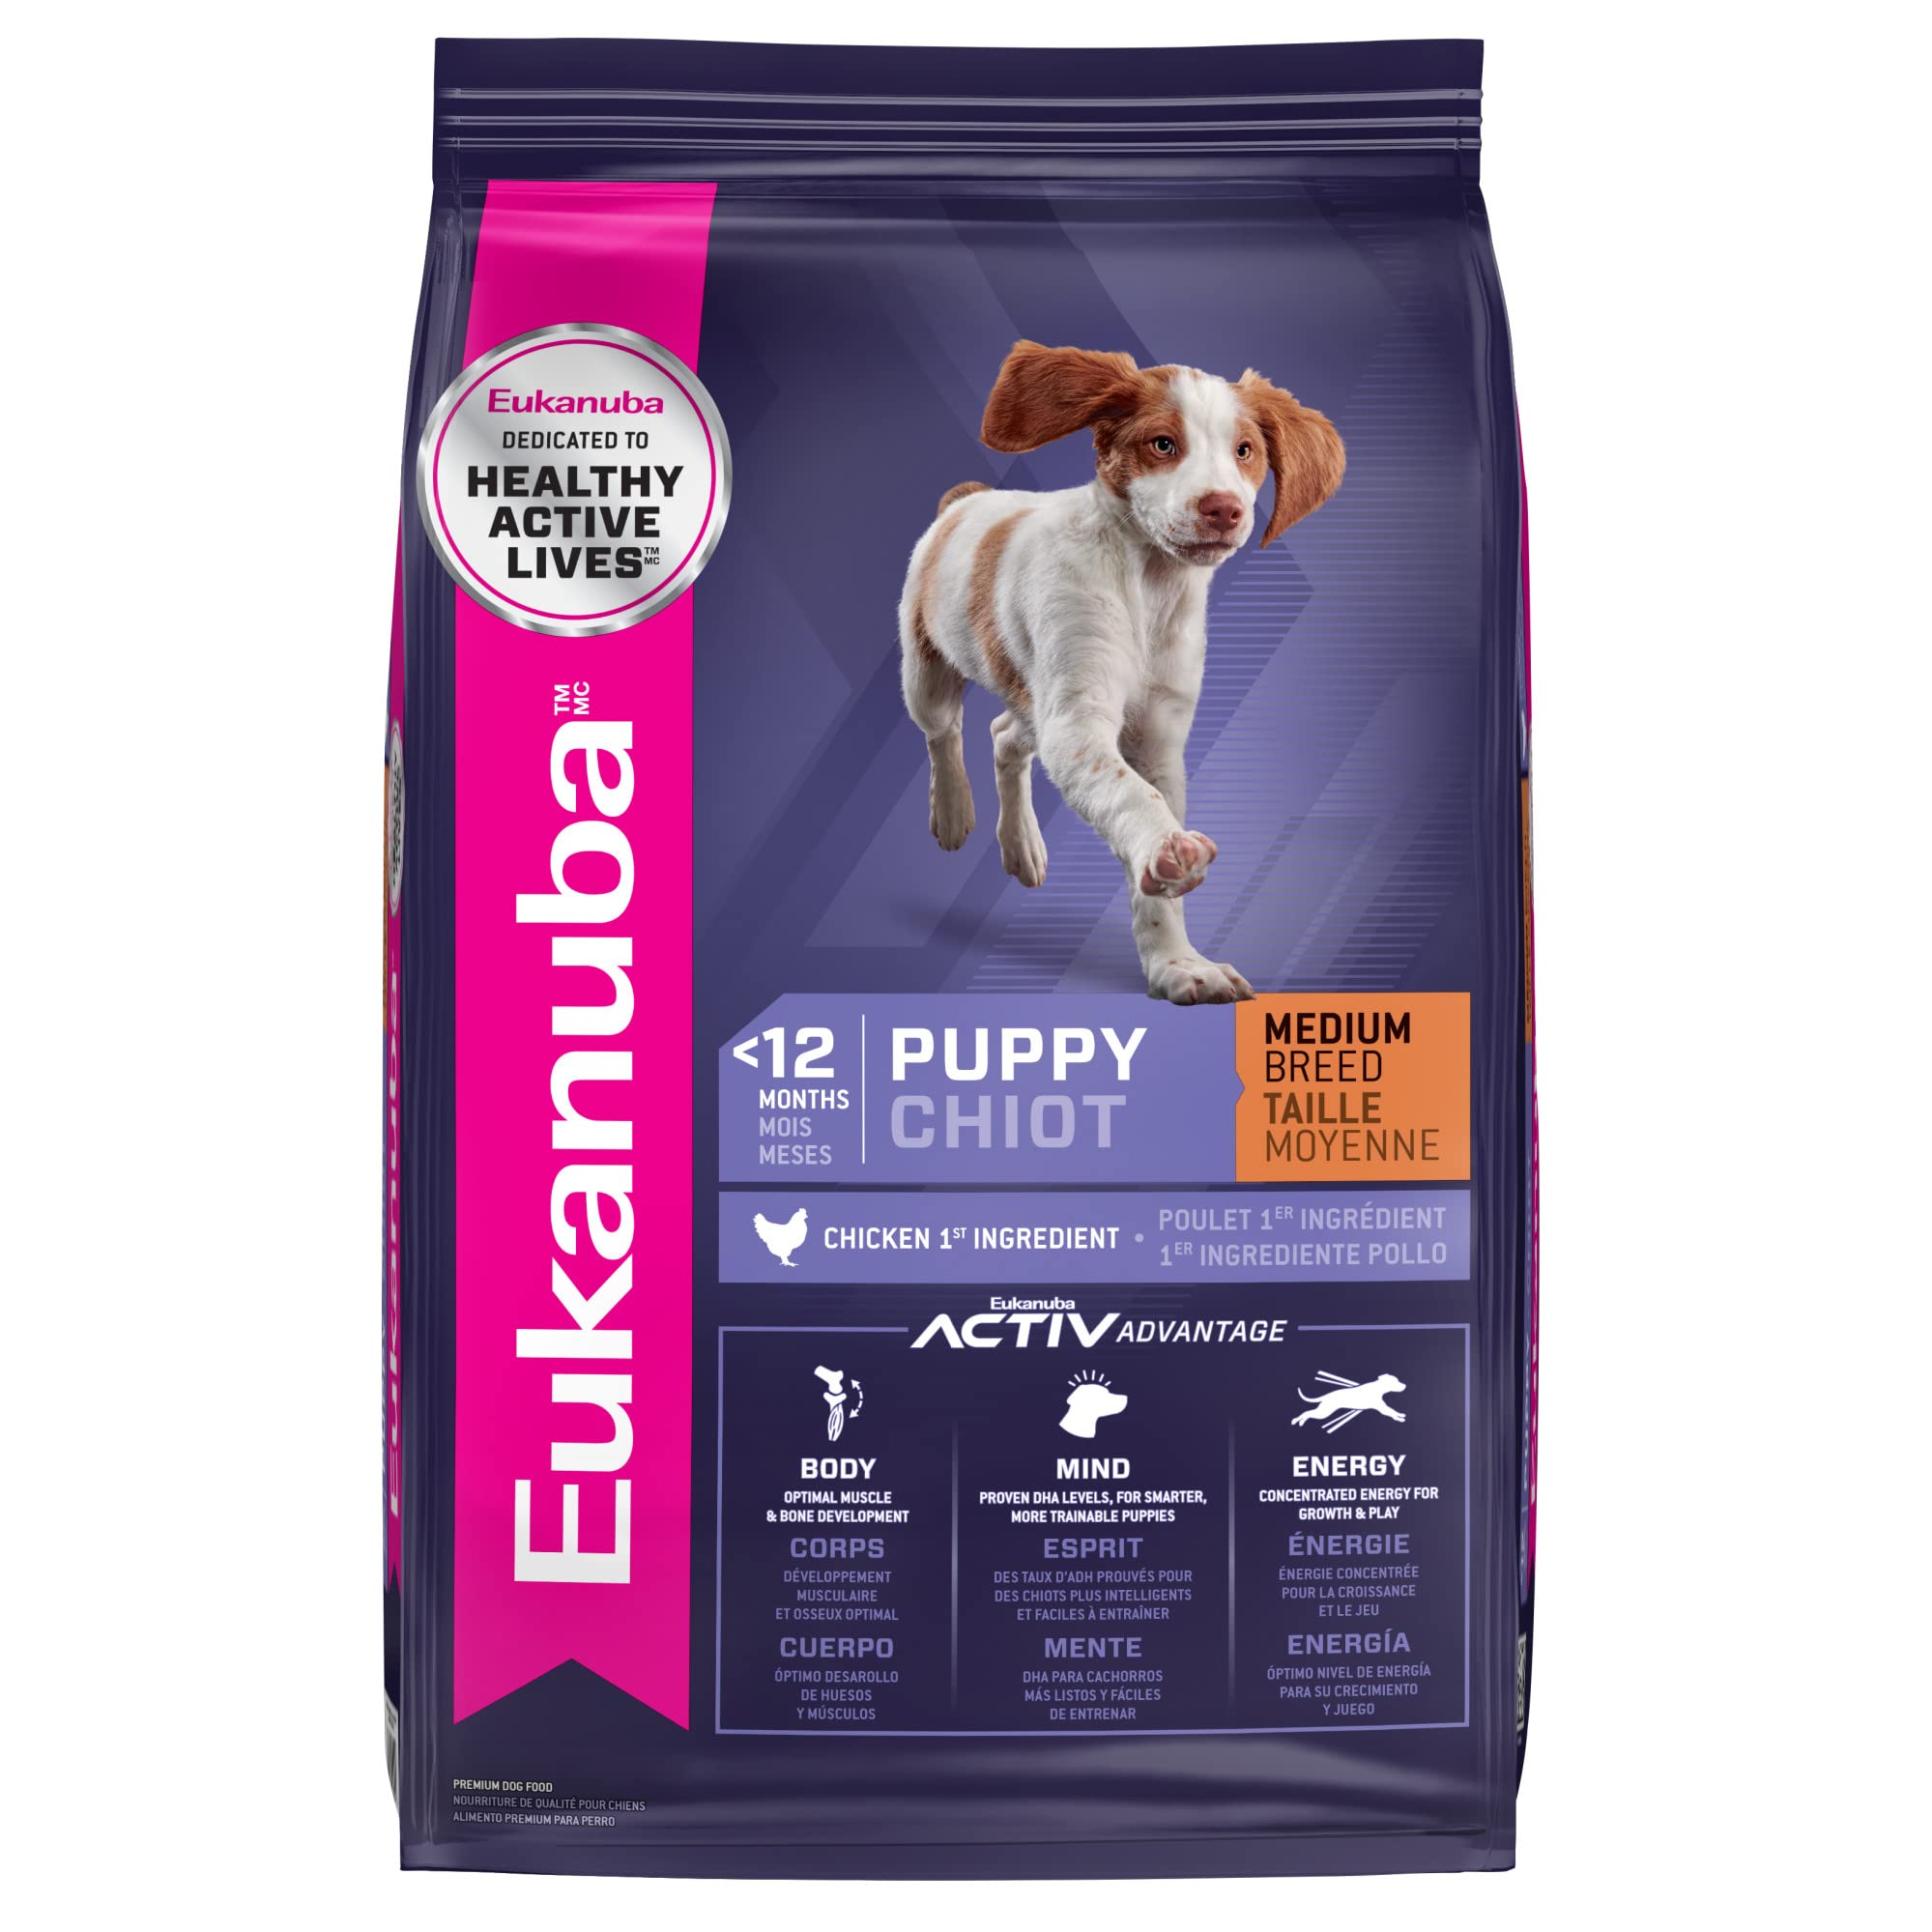 Eukanuba Chicken Early Activ Advantage Medium-Breed Puppy Formula Dry Dog Food - 30 Lbs  